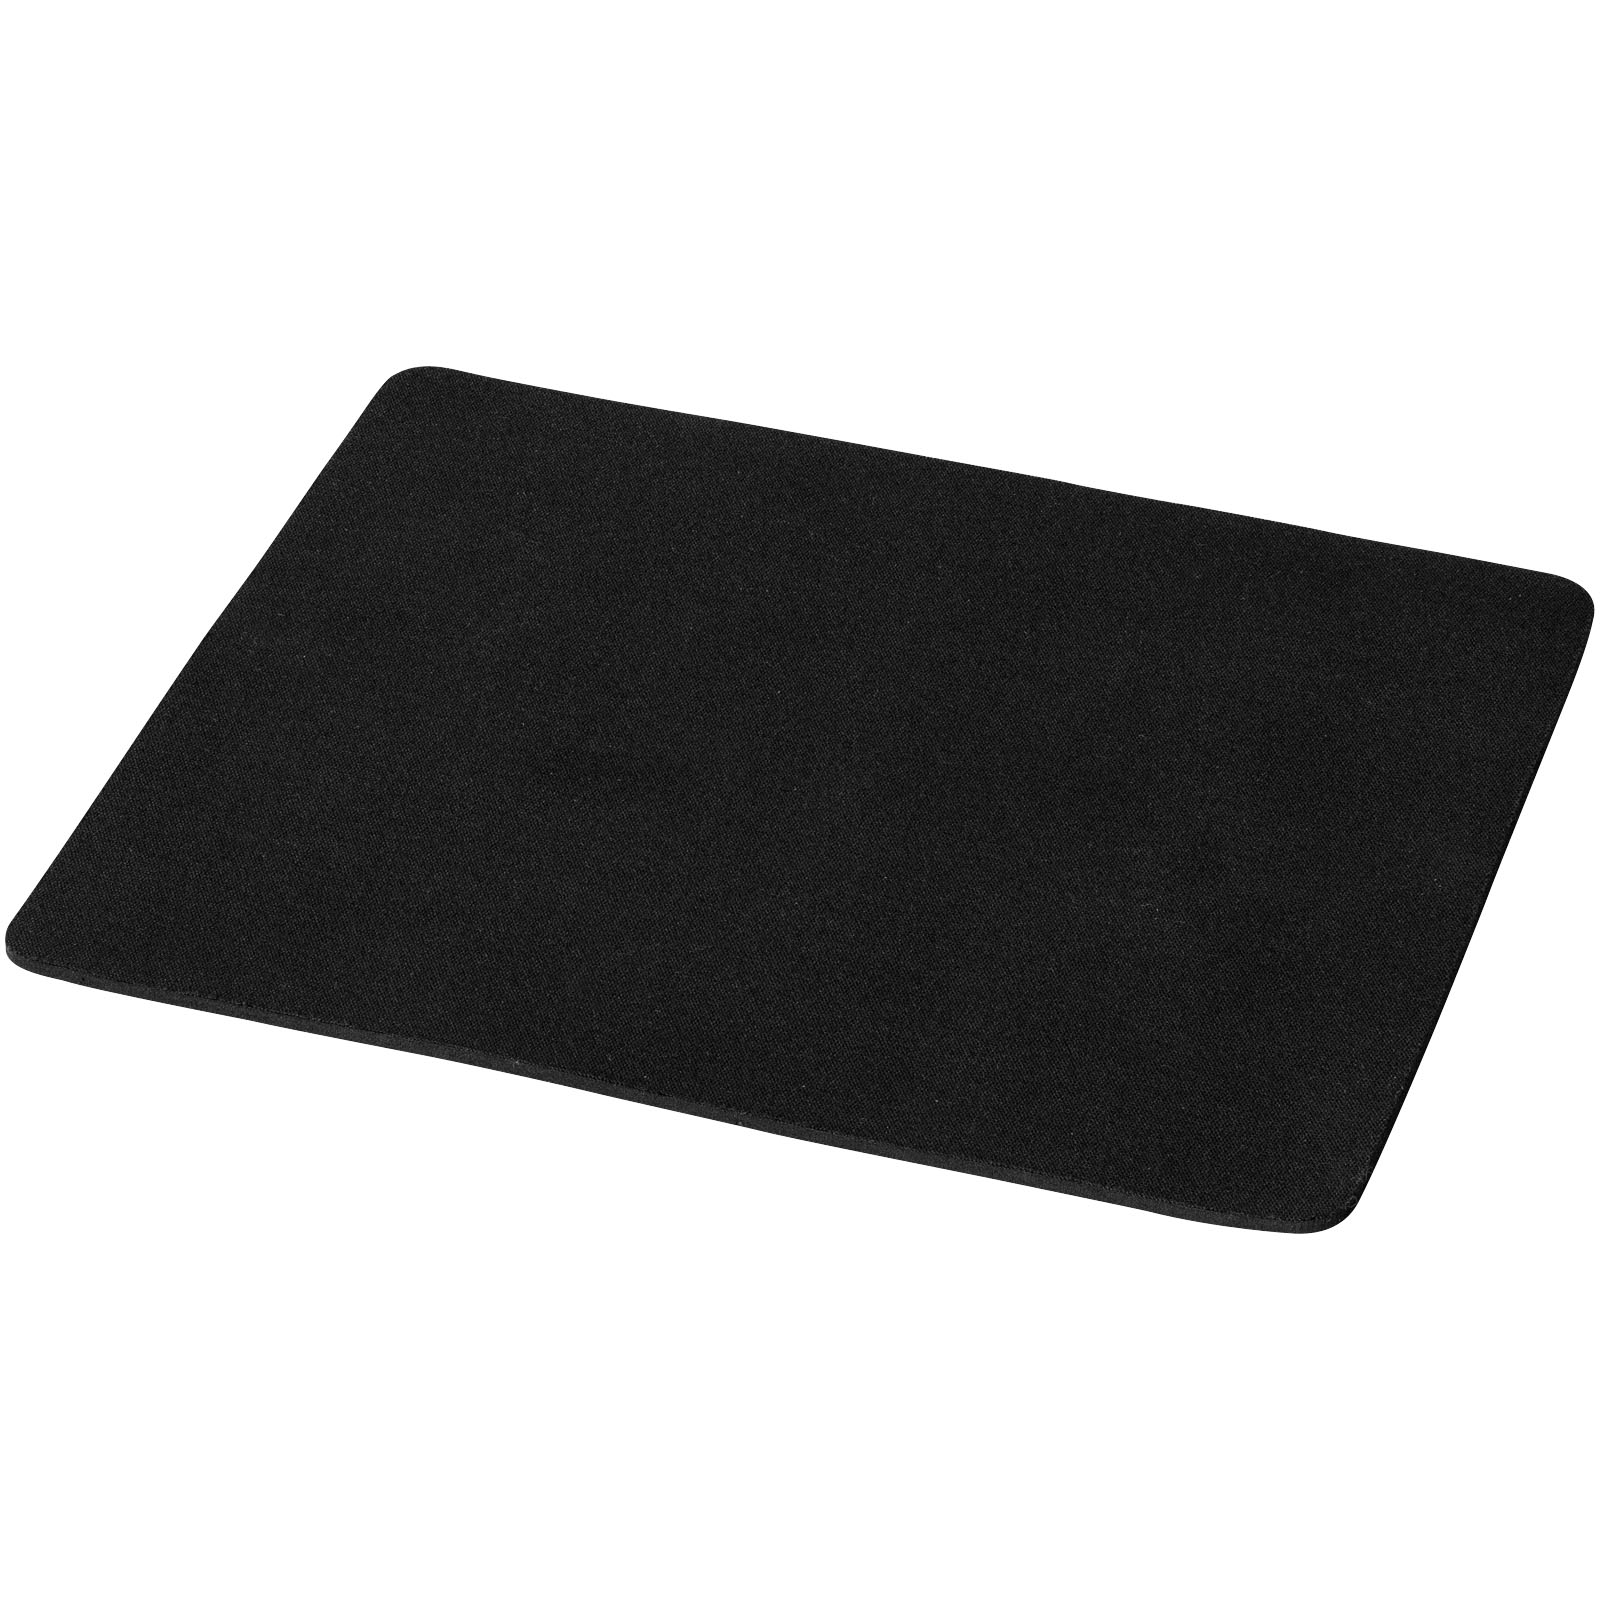 Desk Accessories - Heli flexible mouse pad